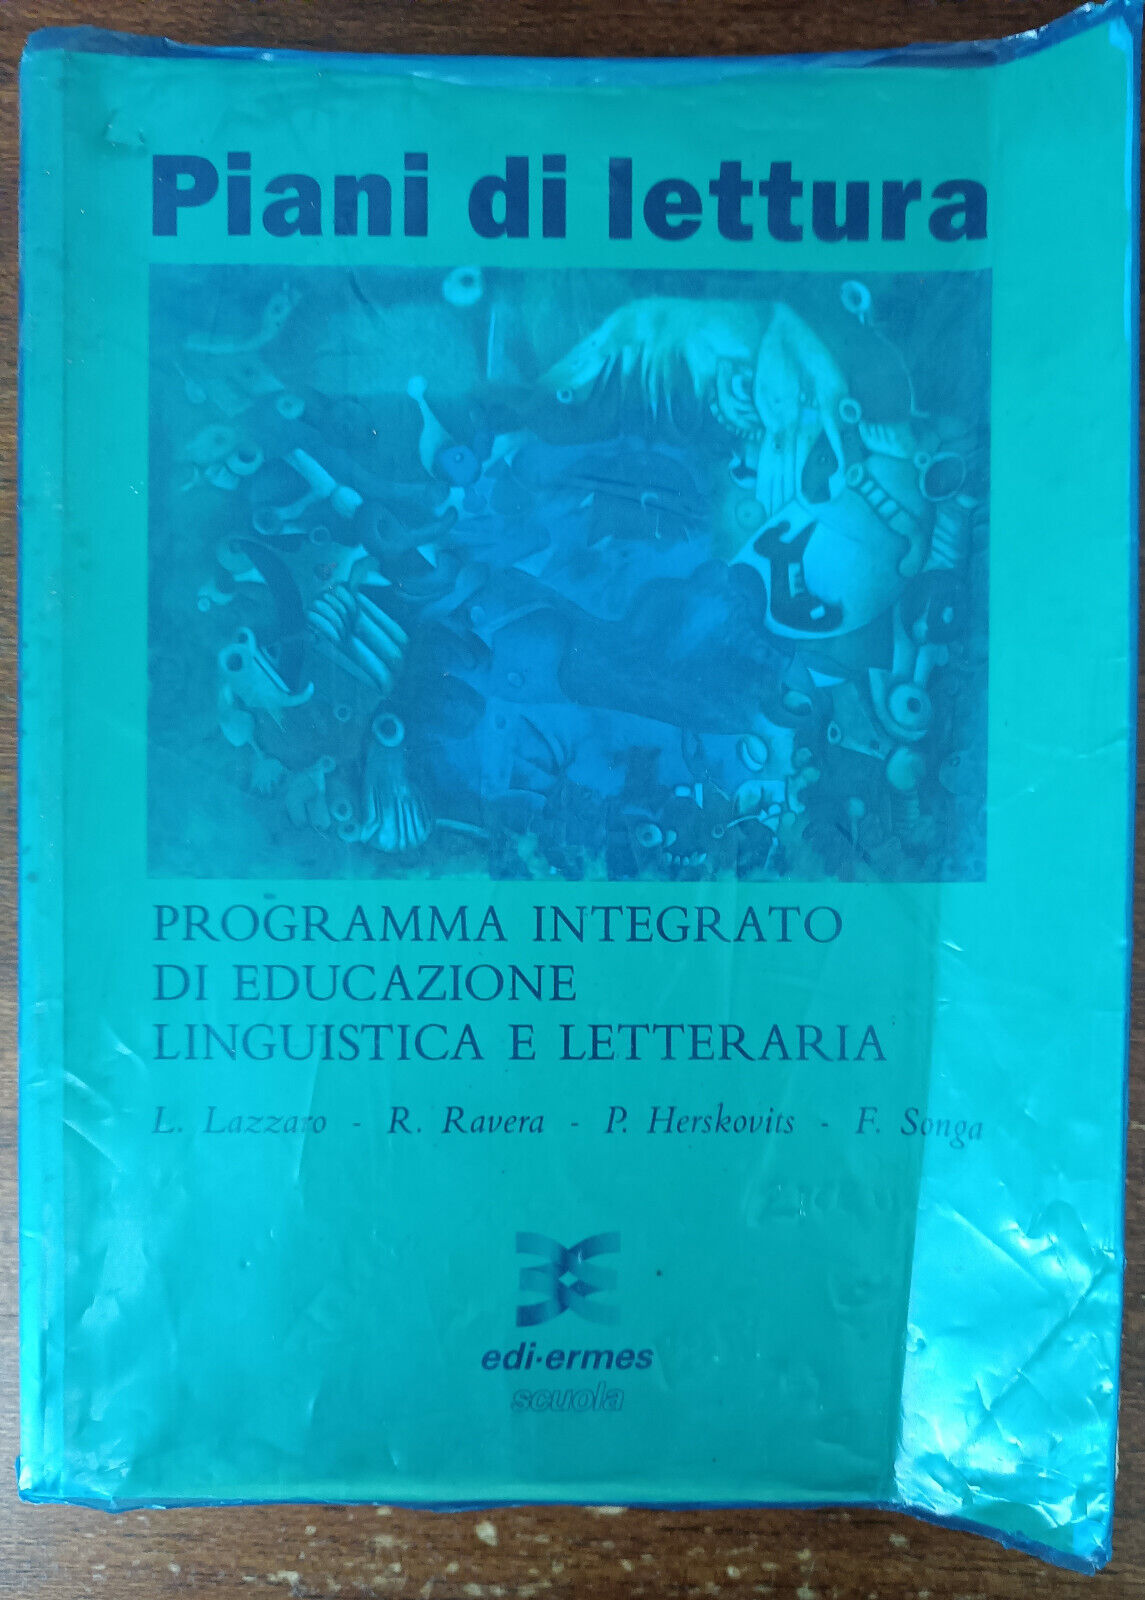 Piani di lettura - Lazzaro, Ravera, Herskovits - Edi-ermes, 1992 - A